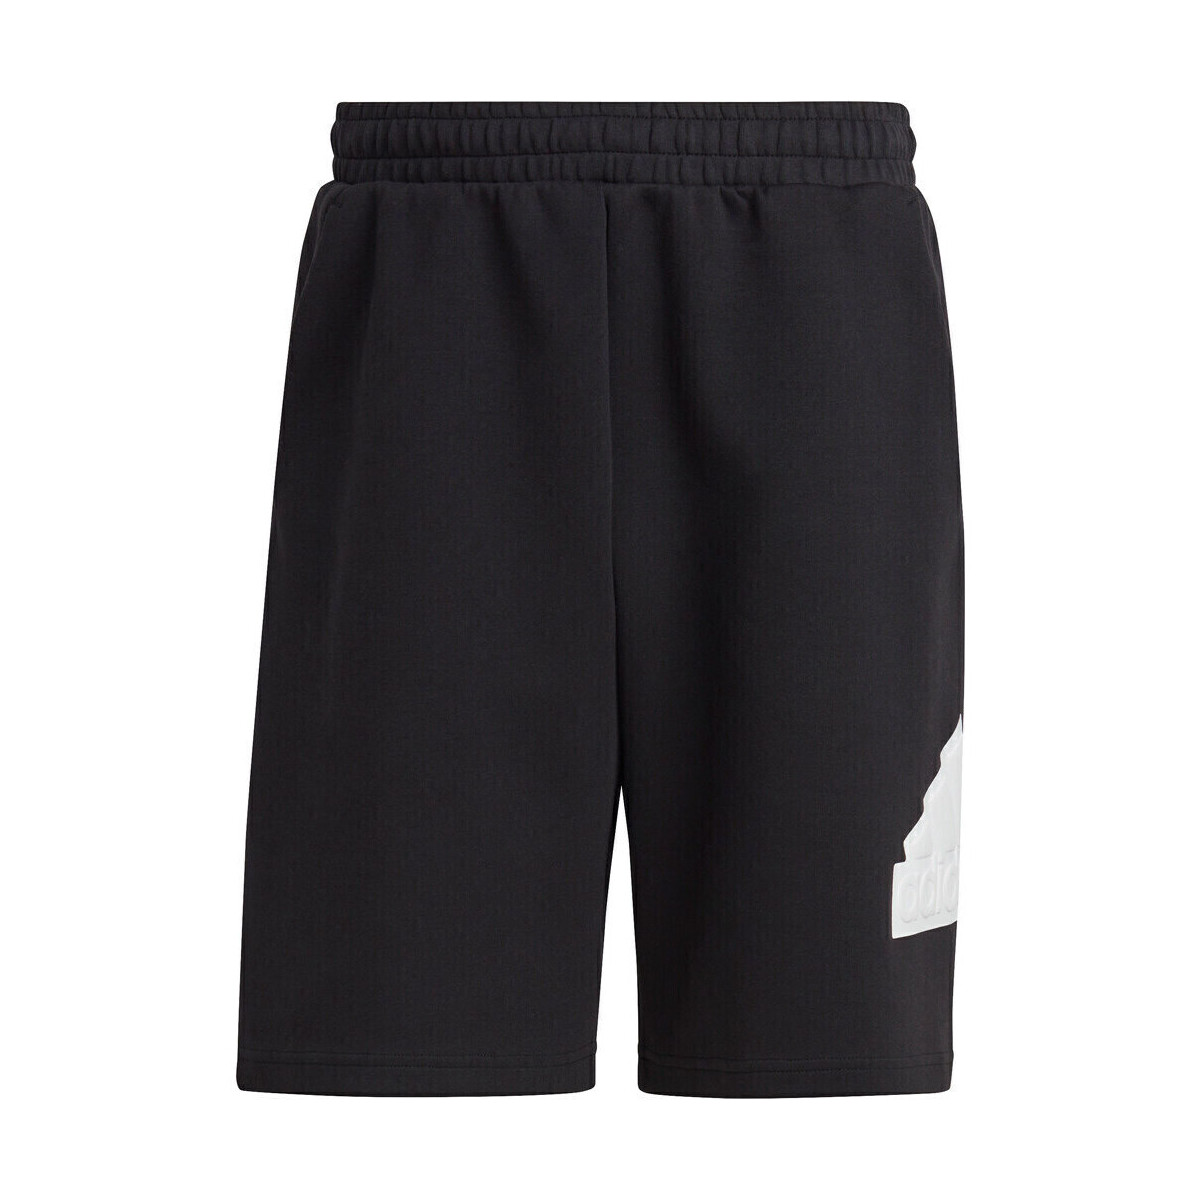 Vêtements Homme Shorts / Bermudas adidas Originals M FI BOS SHO Noir